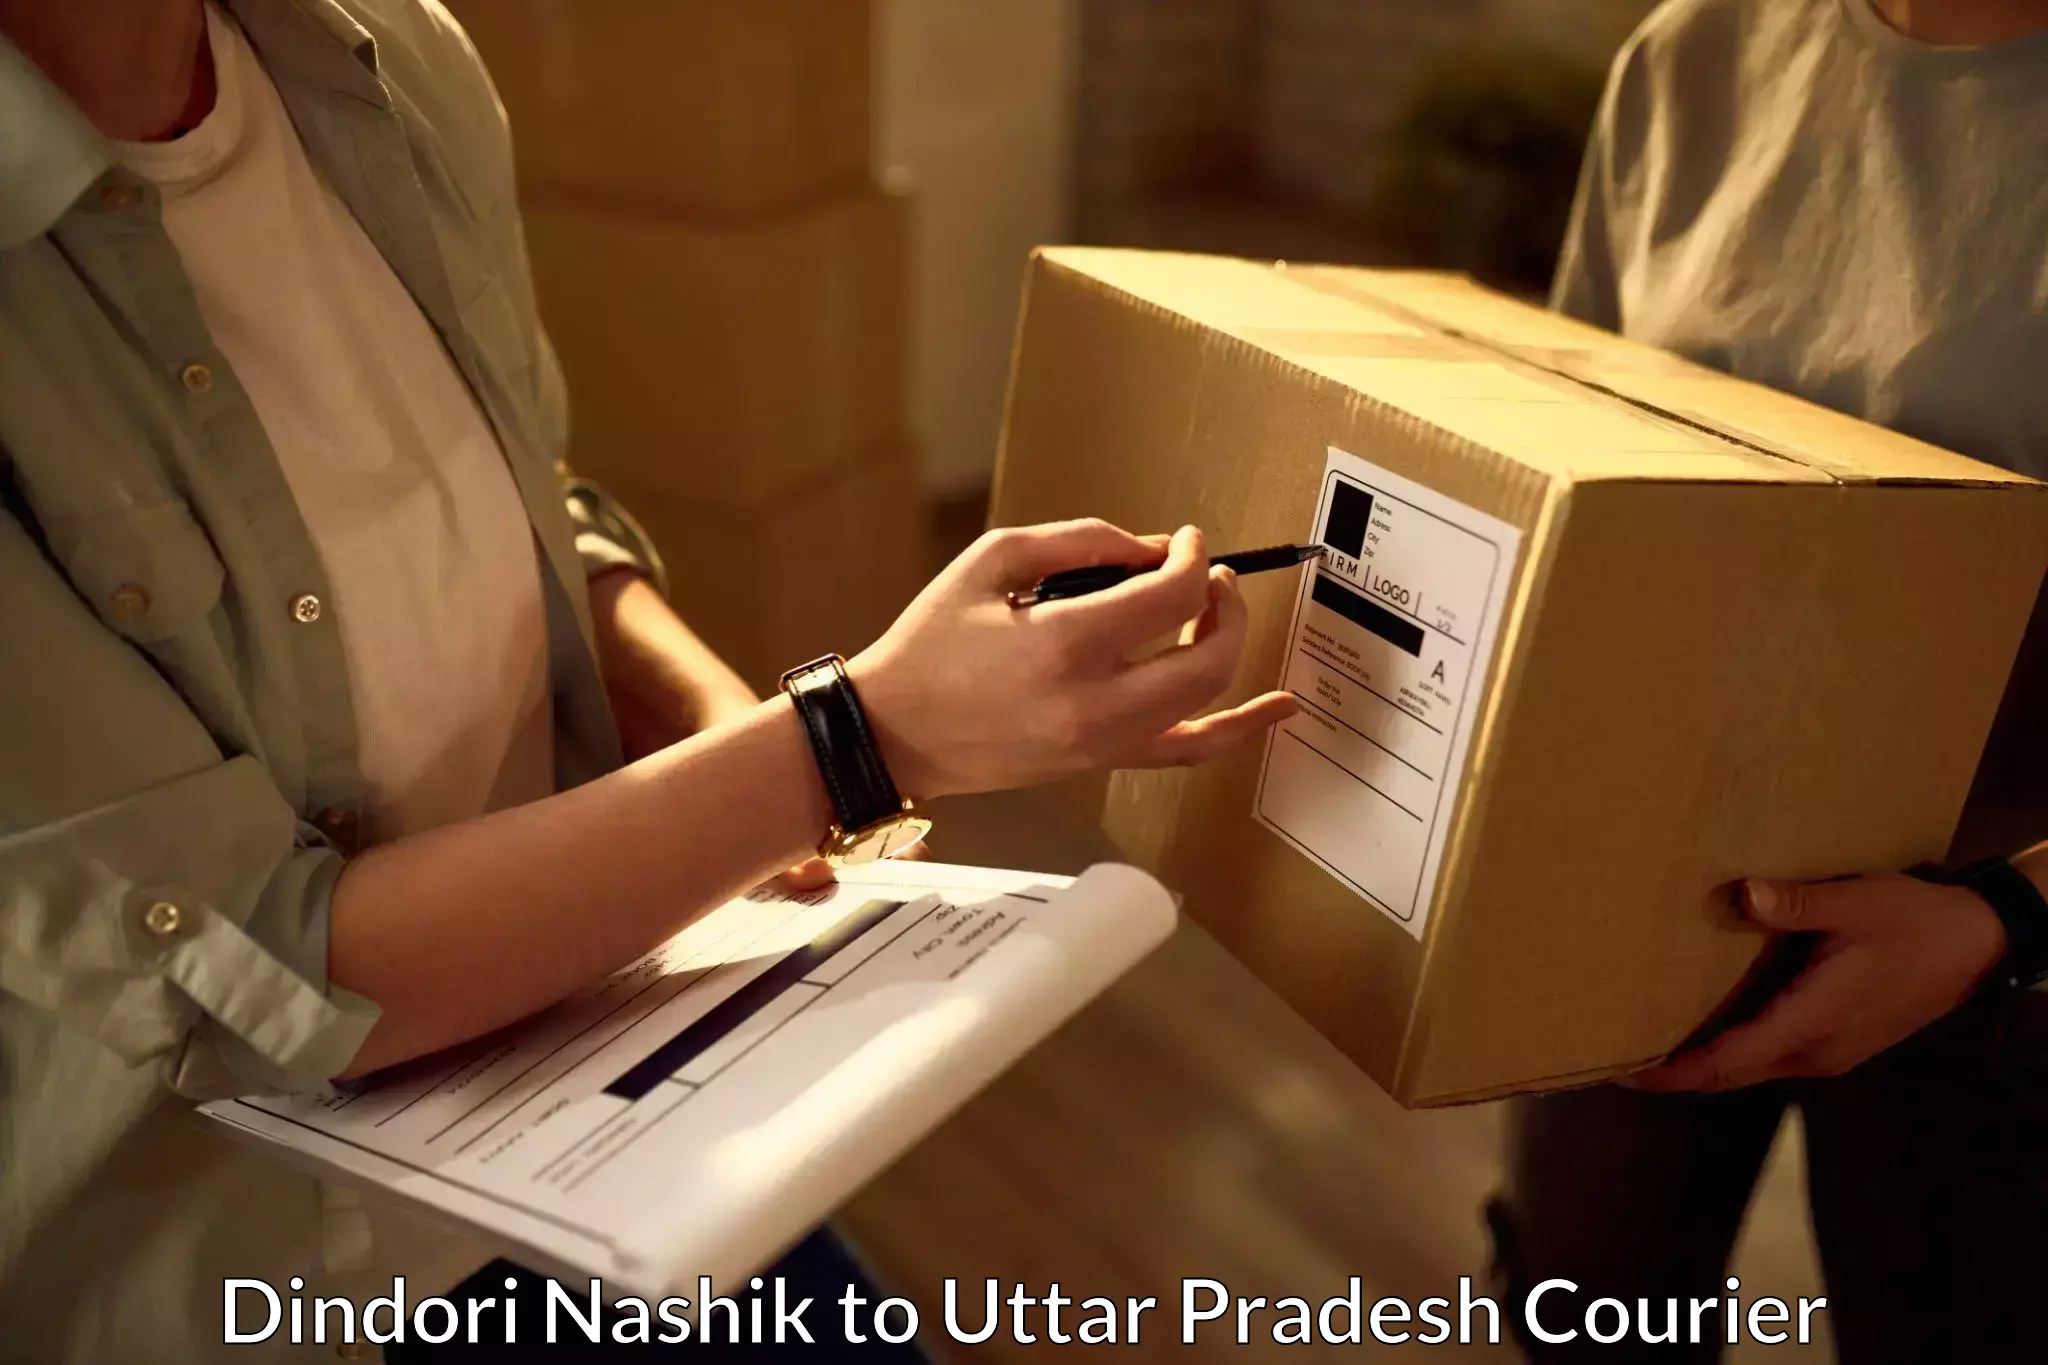 Package delivery network Dindori Nashik to Bansi